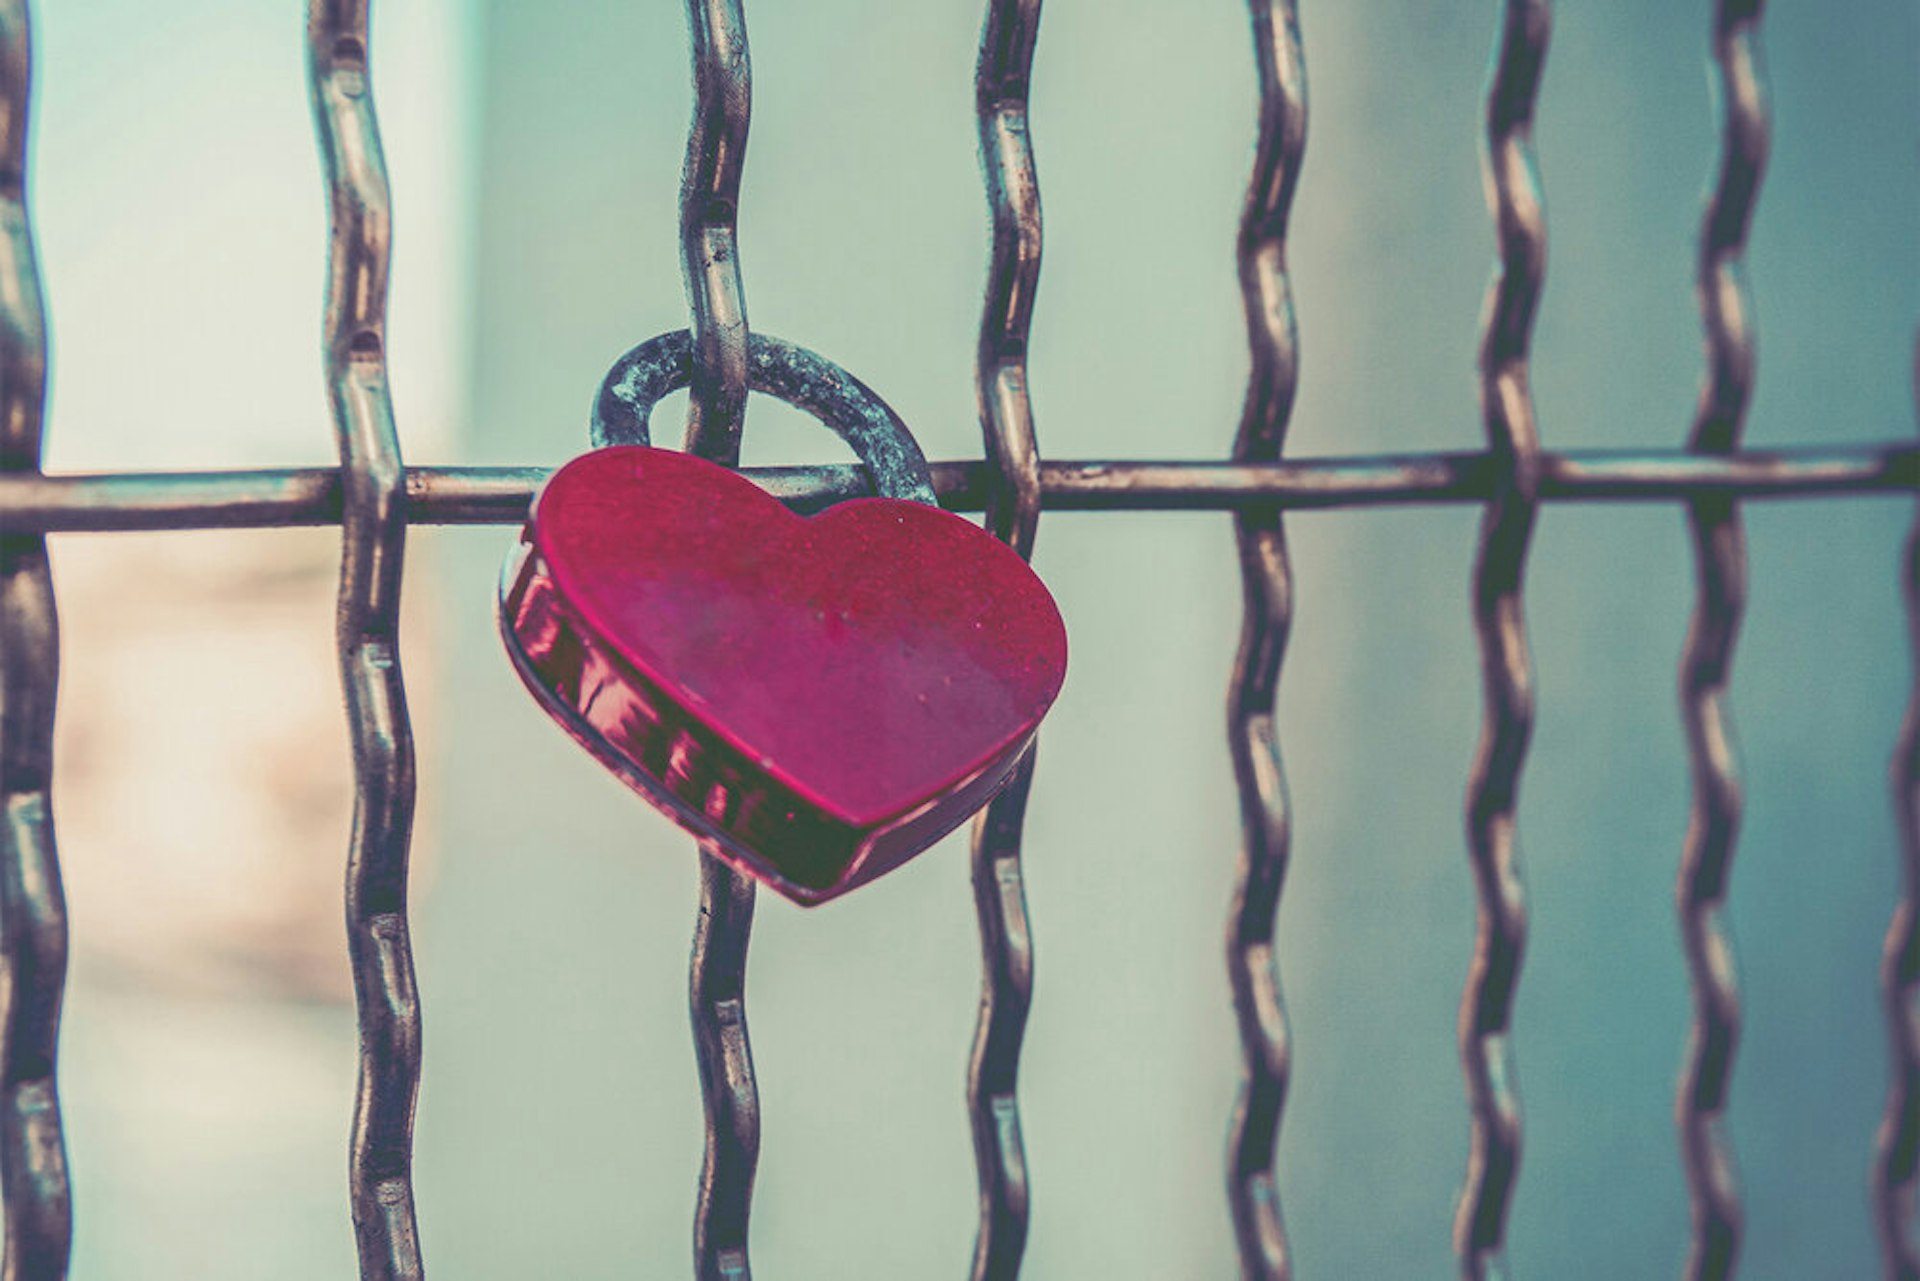 A love heart padlock locked to a fence.